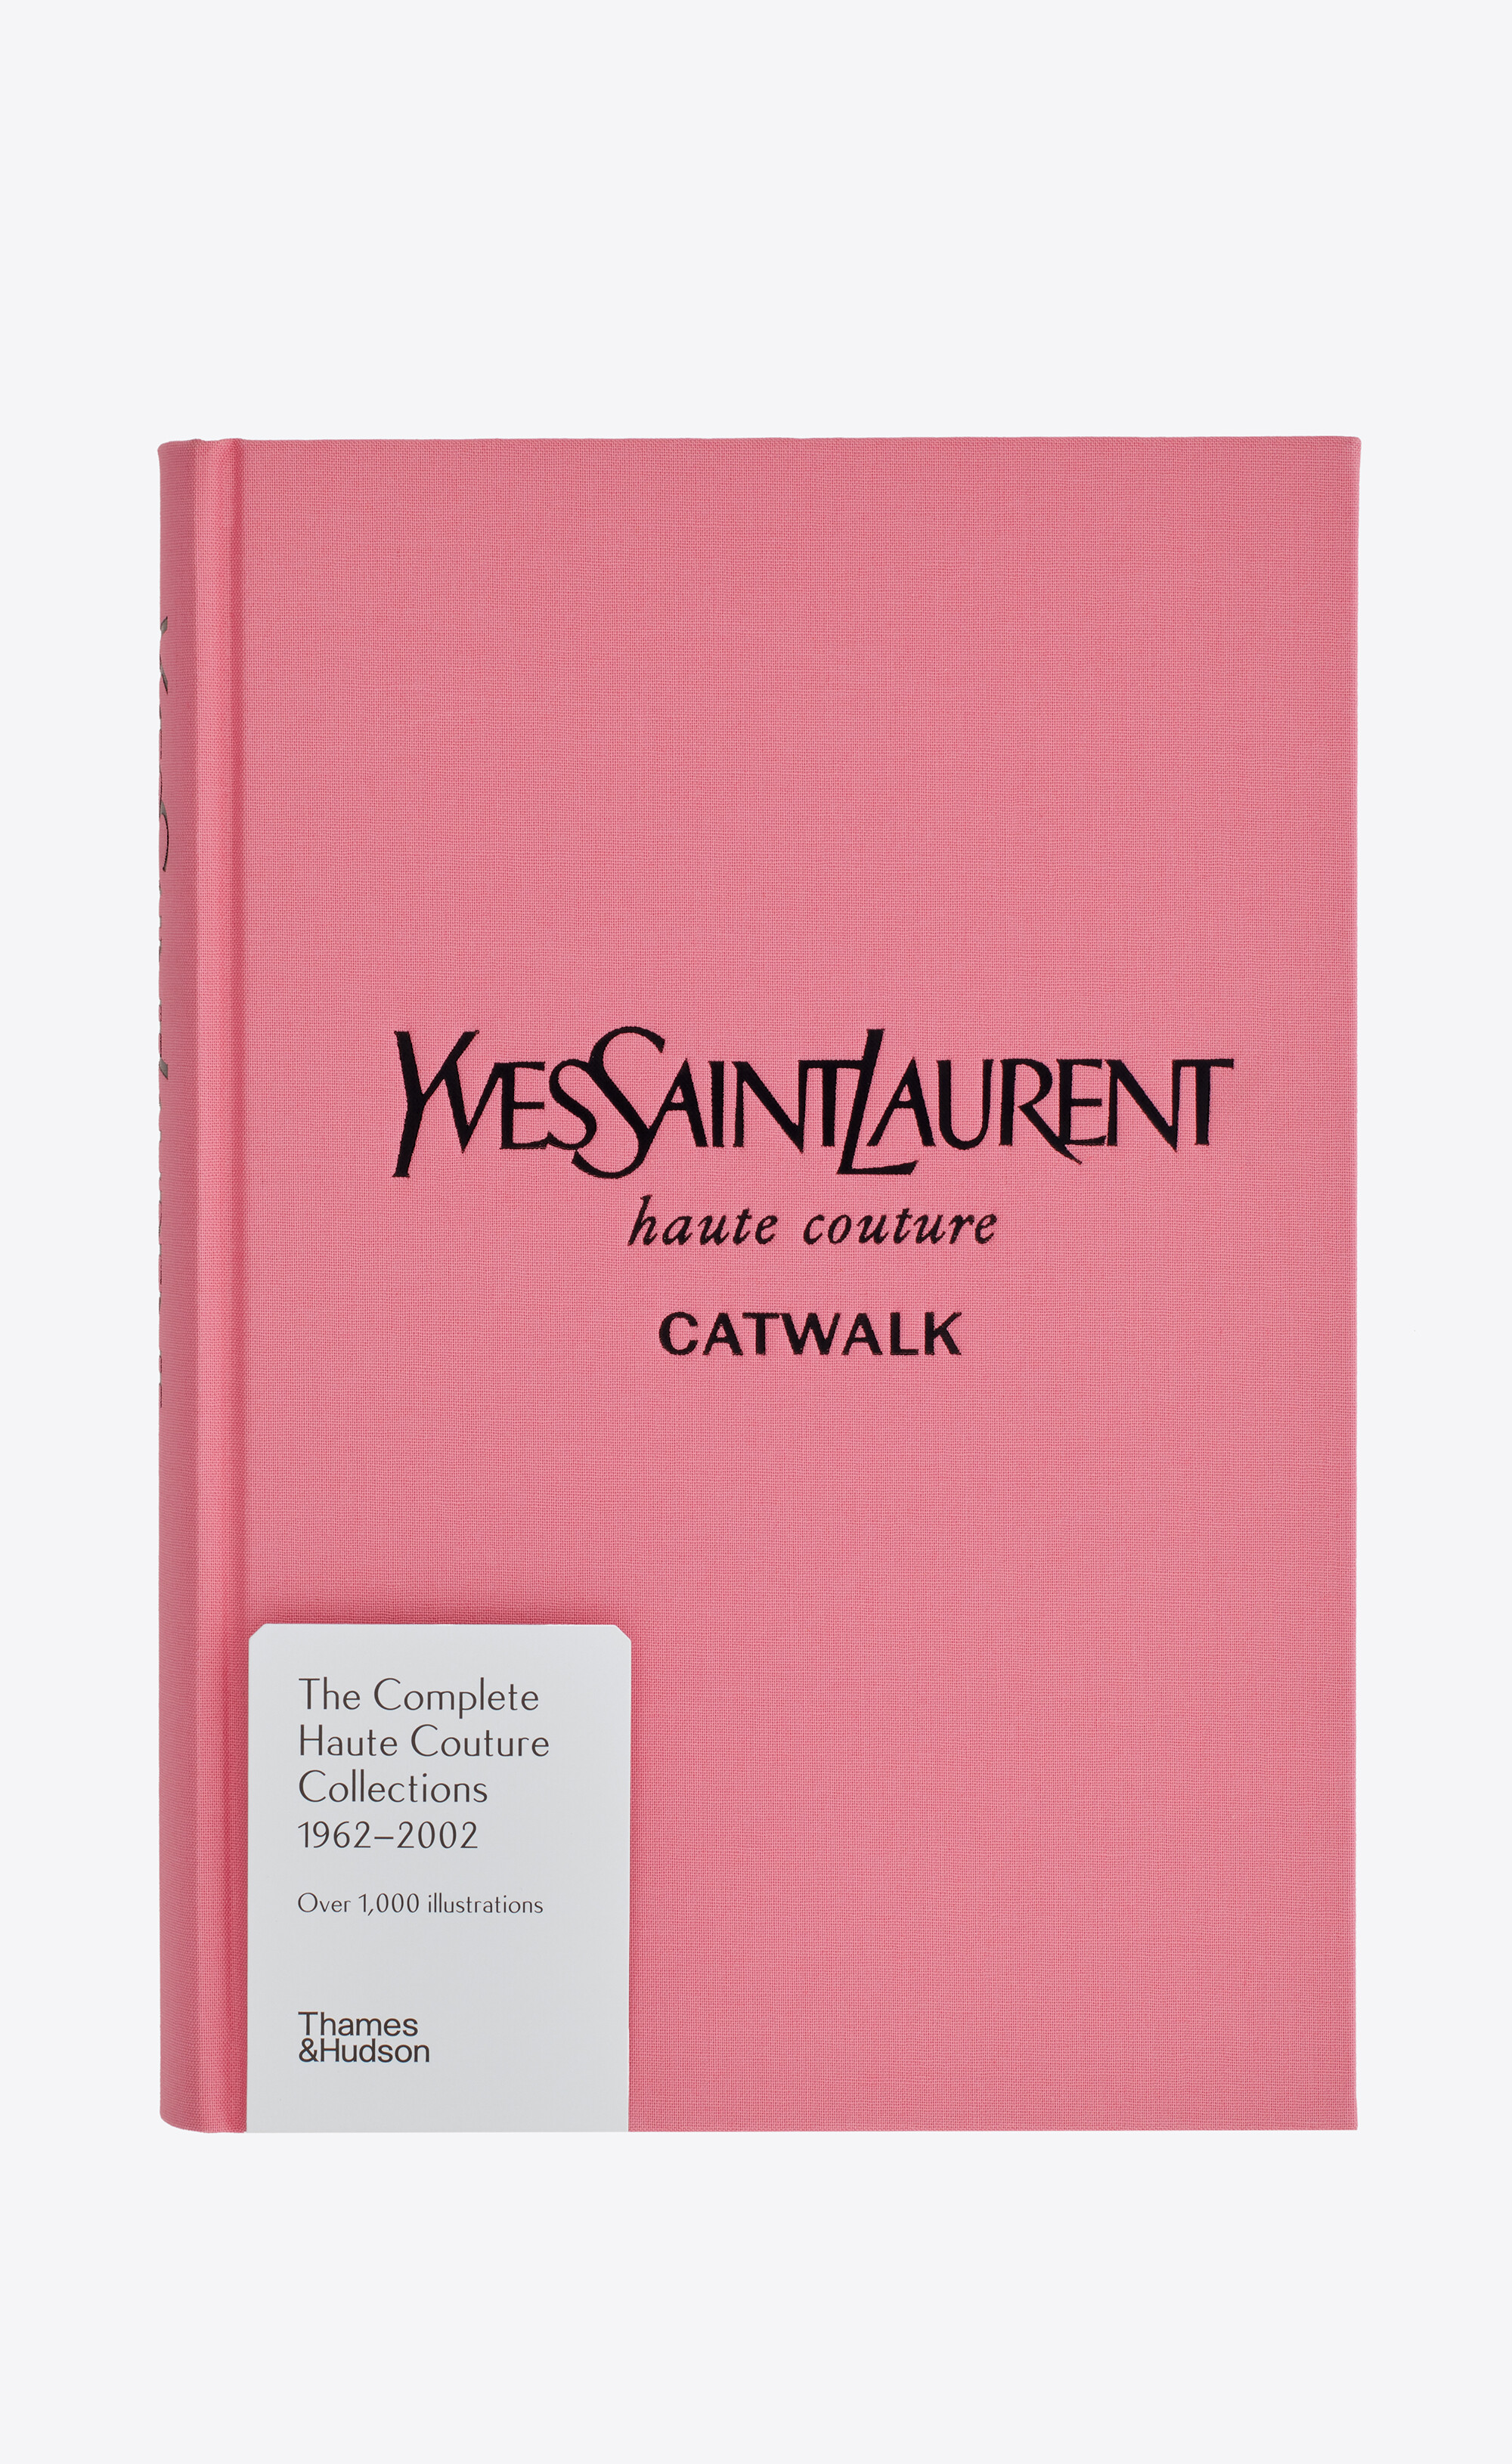 ysl catwalk book｜Búsqueda de TikTok